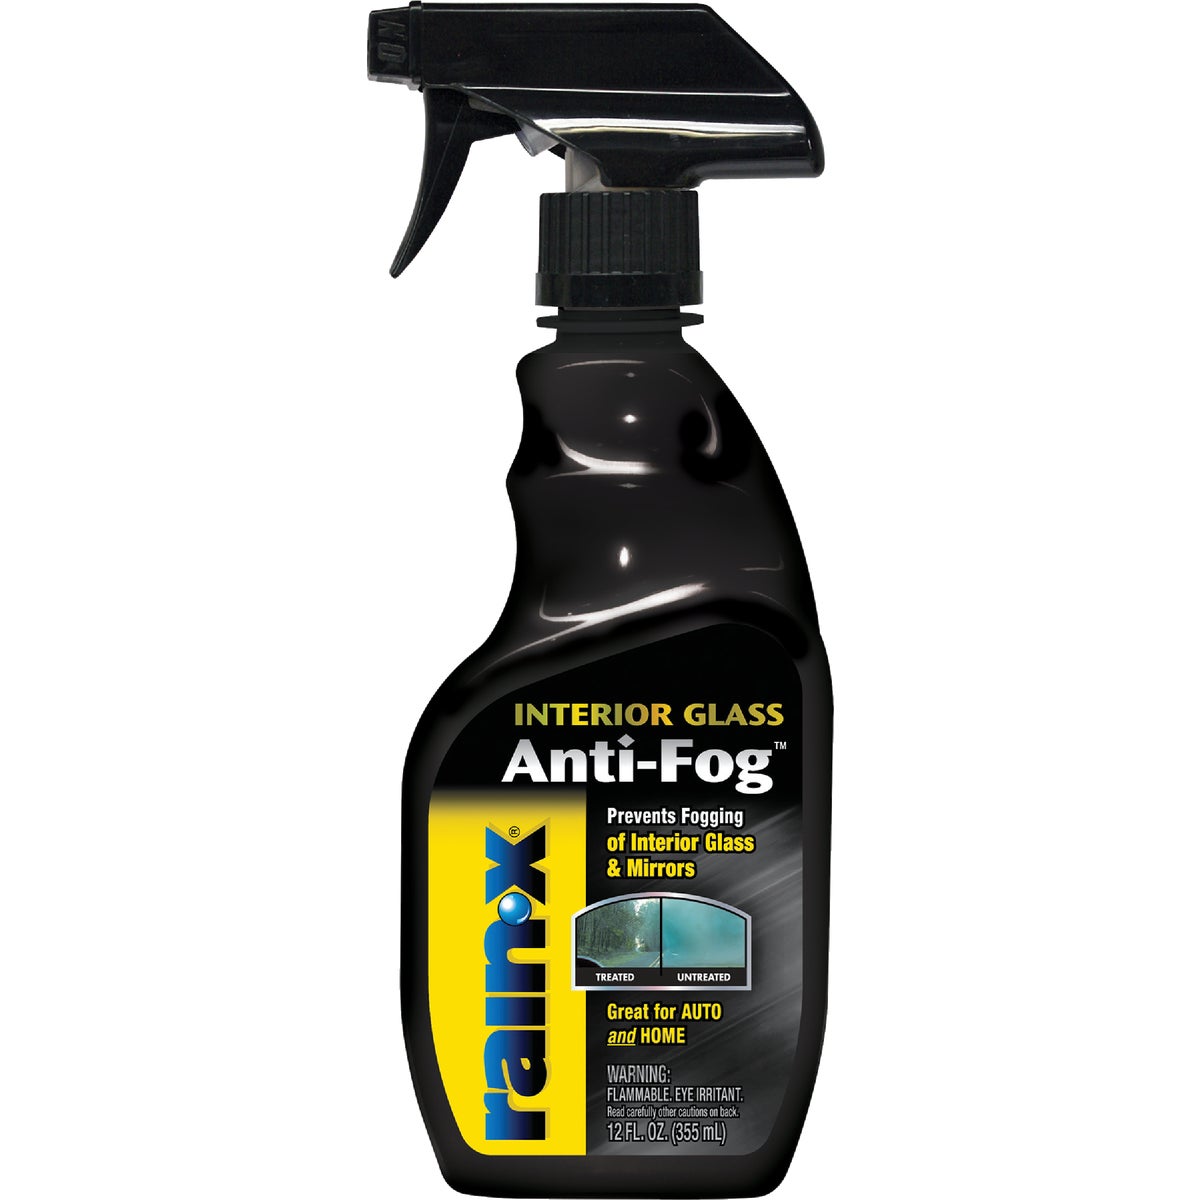 Rain-X 12 Oz. Trigger Spray Interior Glass Anti-Fog Cleaner